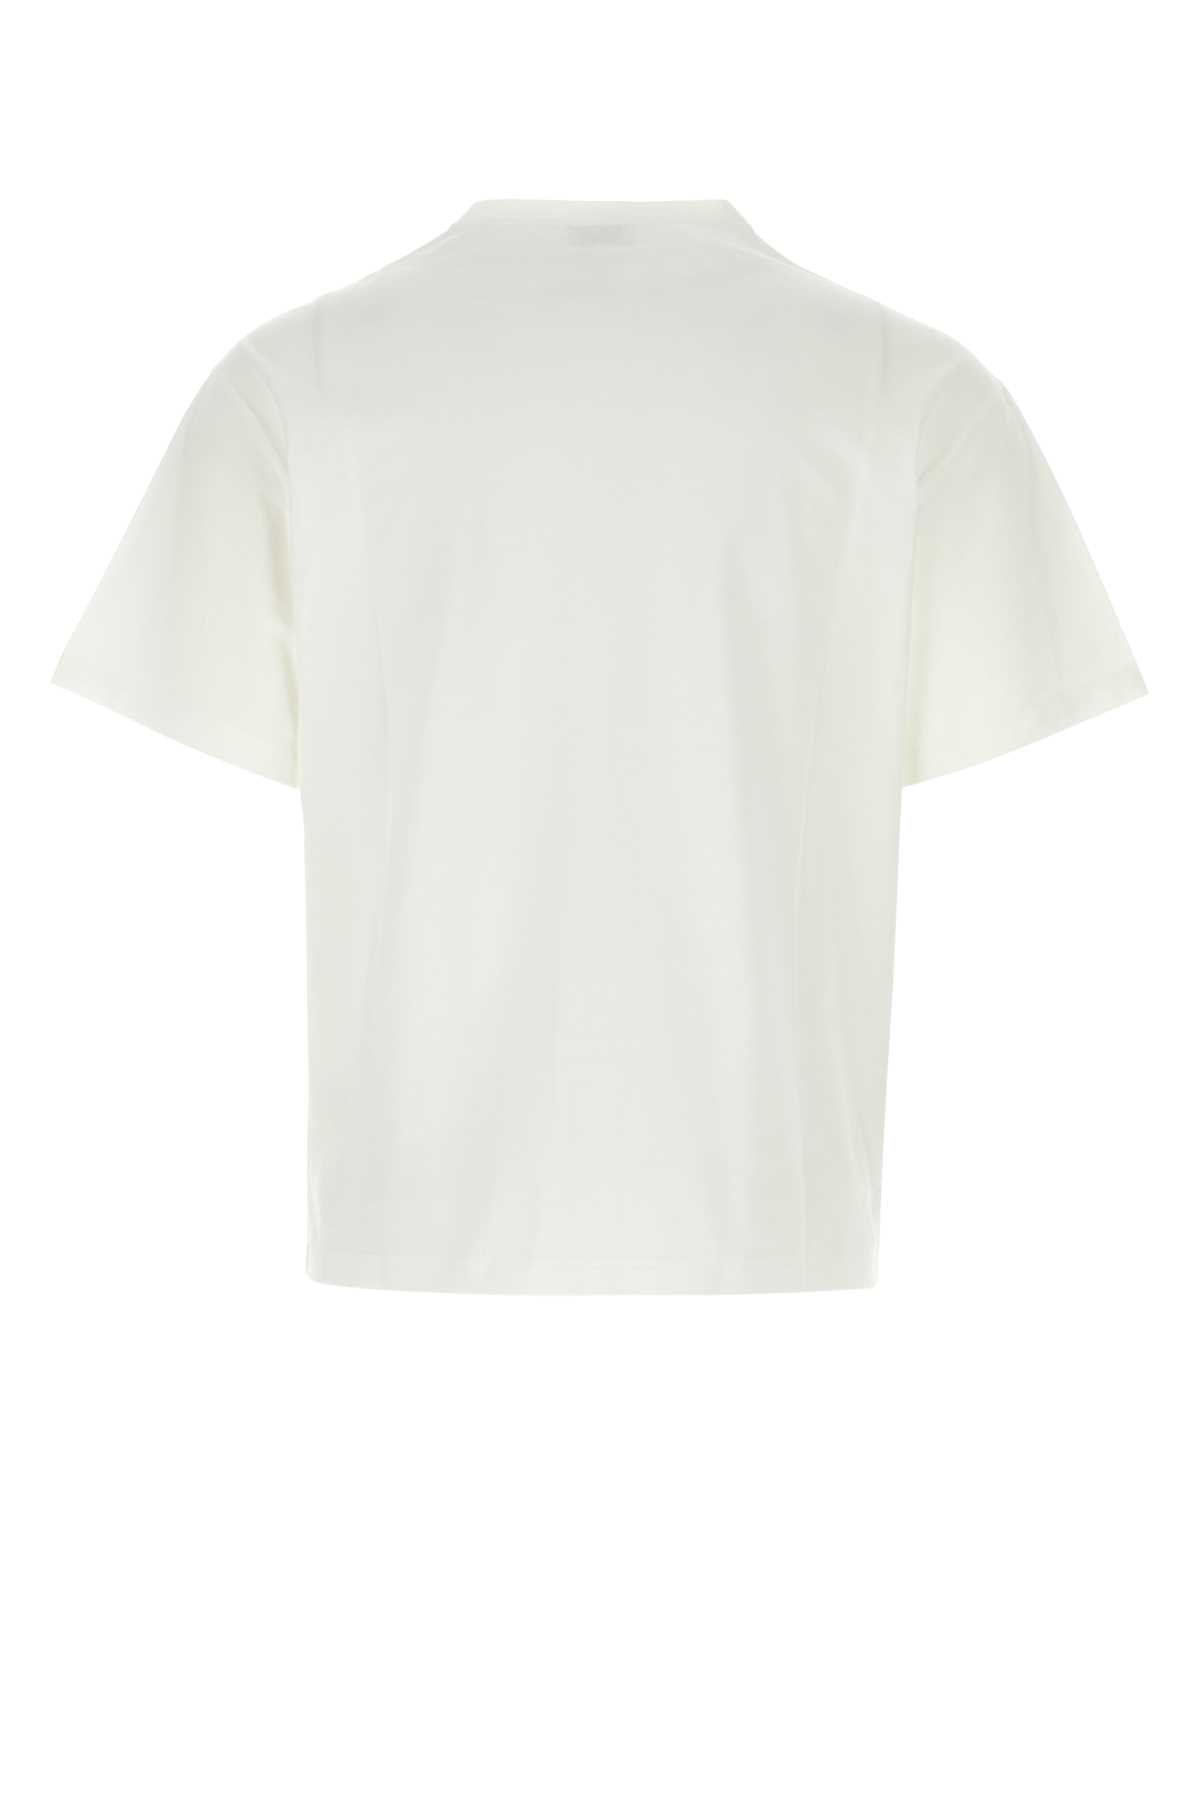 Etro White Cotton T-shirt In Bianco